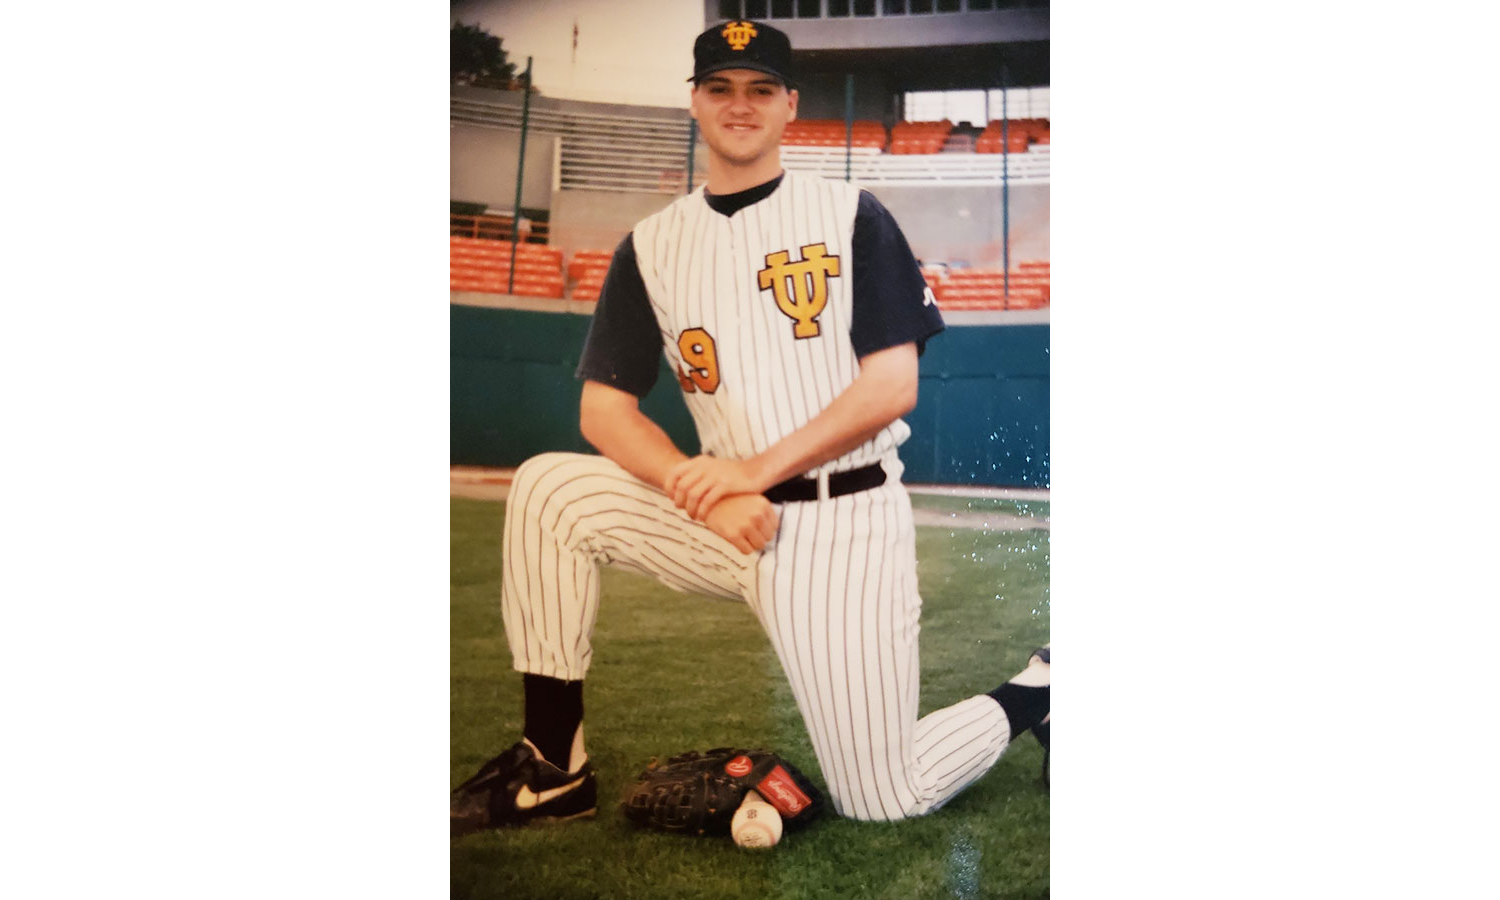 Travis Exum in a striped Vol baseball uniform